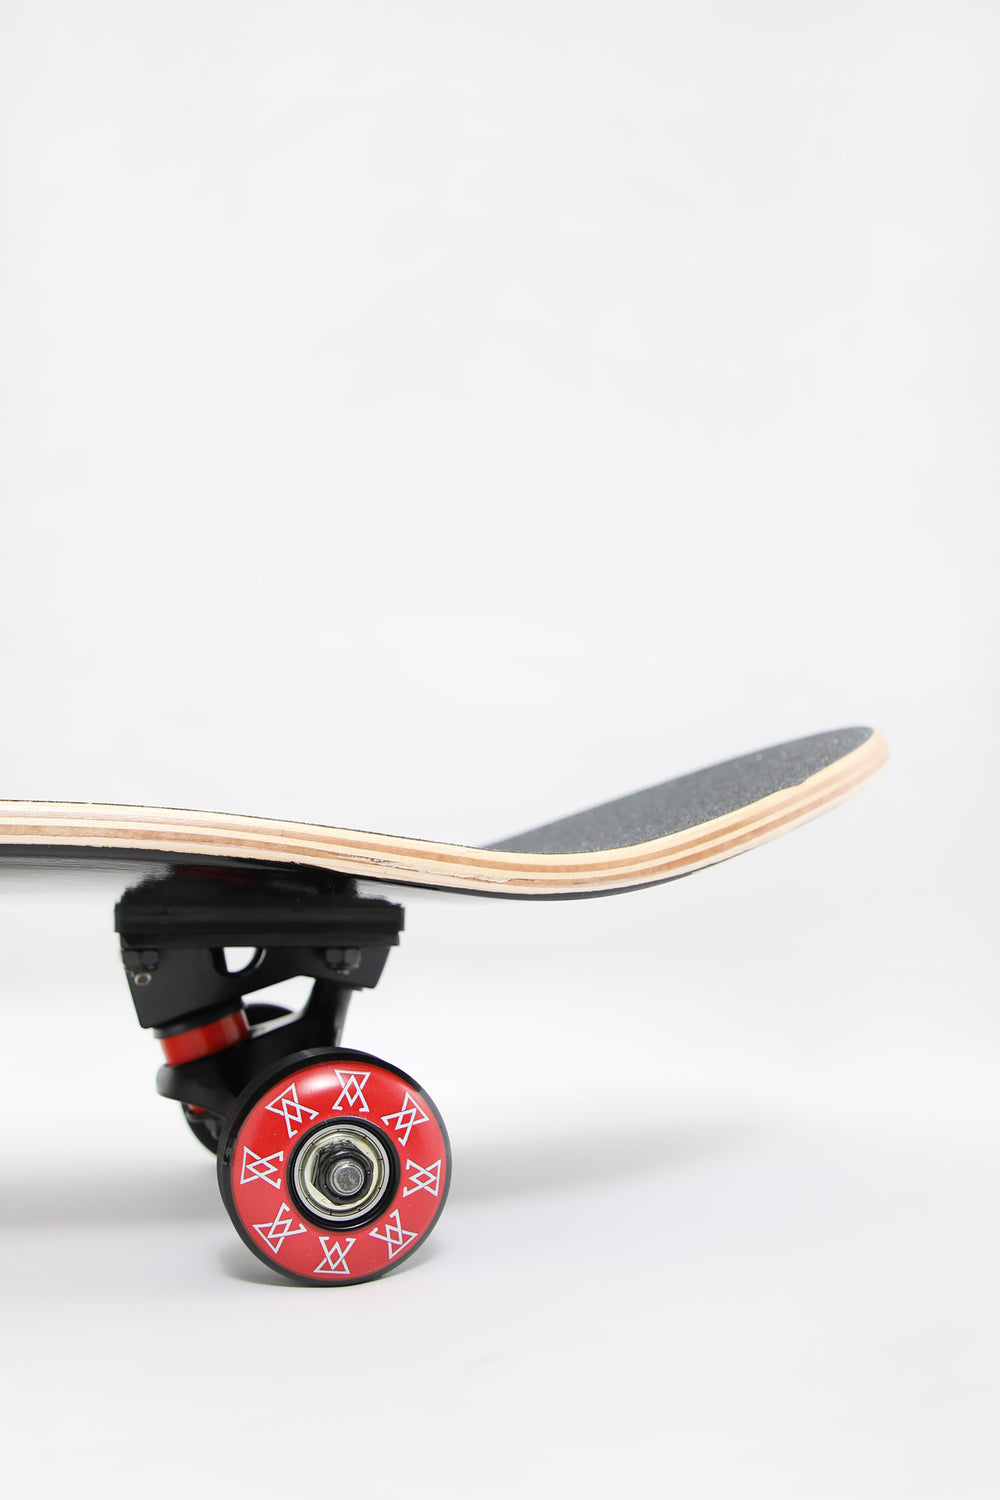 Skateboard Imprimé Born To Win Arsenic 8.25